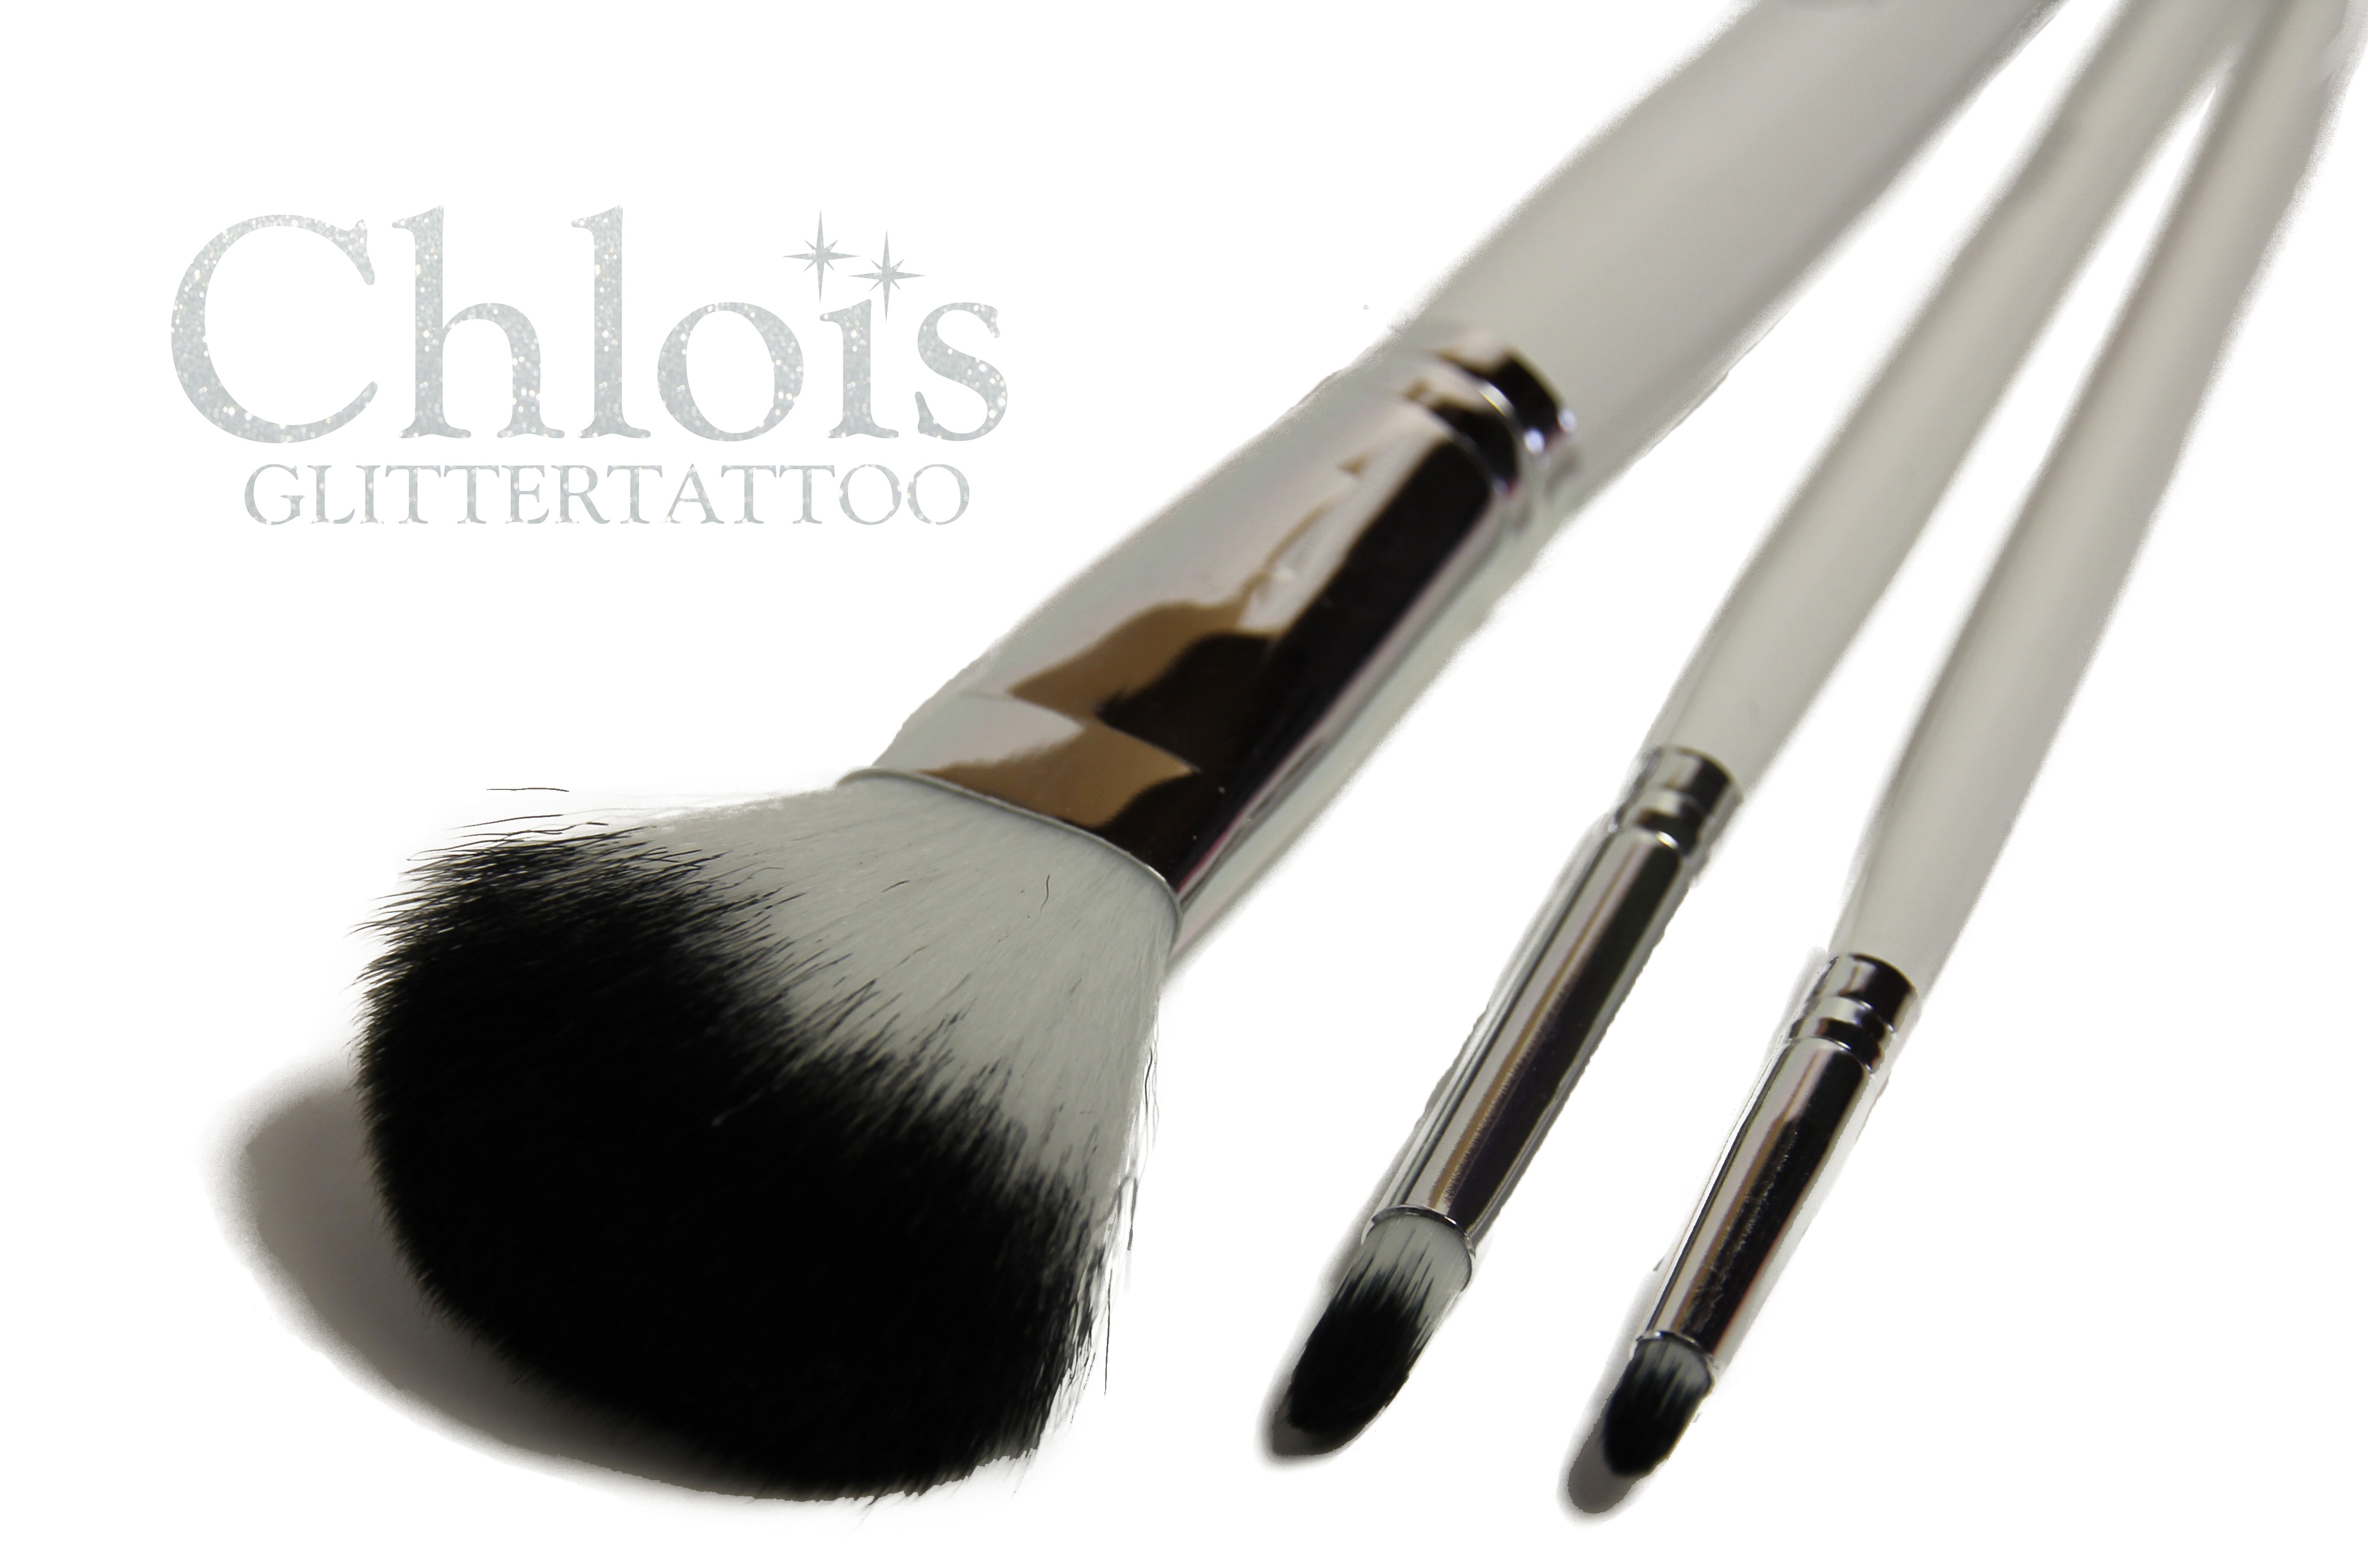 Chloïs Glittertattoo Brushset Pro (3 brushes)